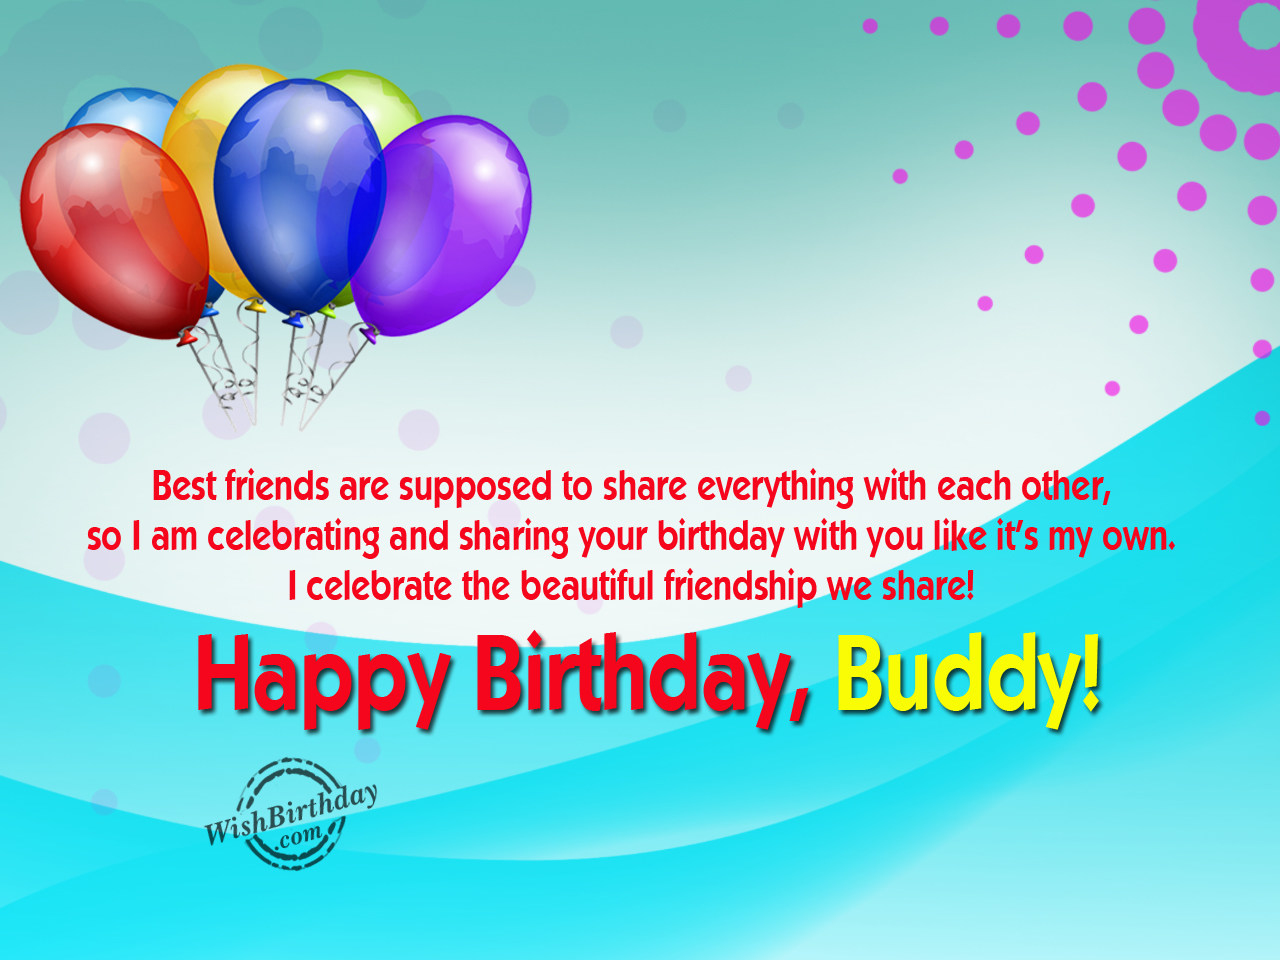 happy birthday buddy wishes